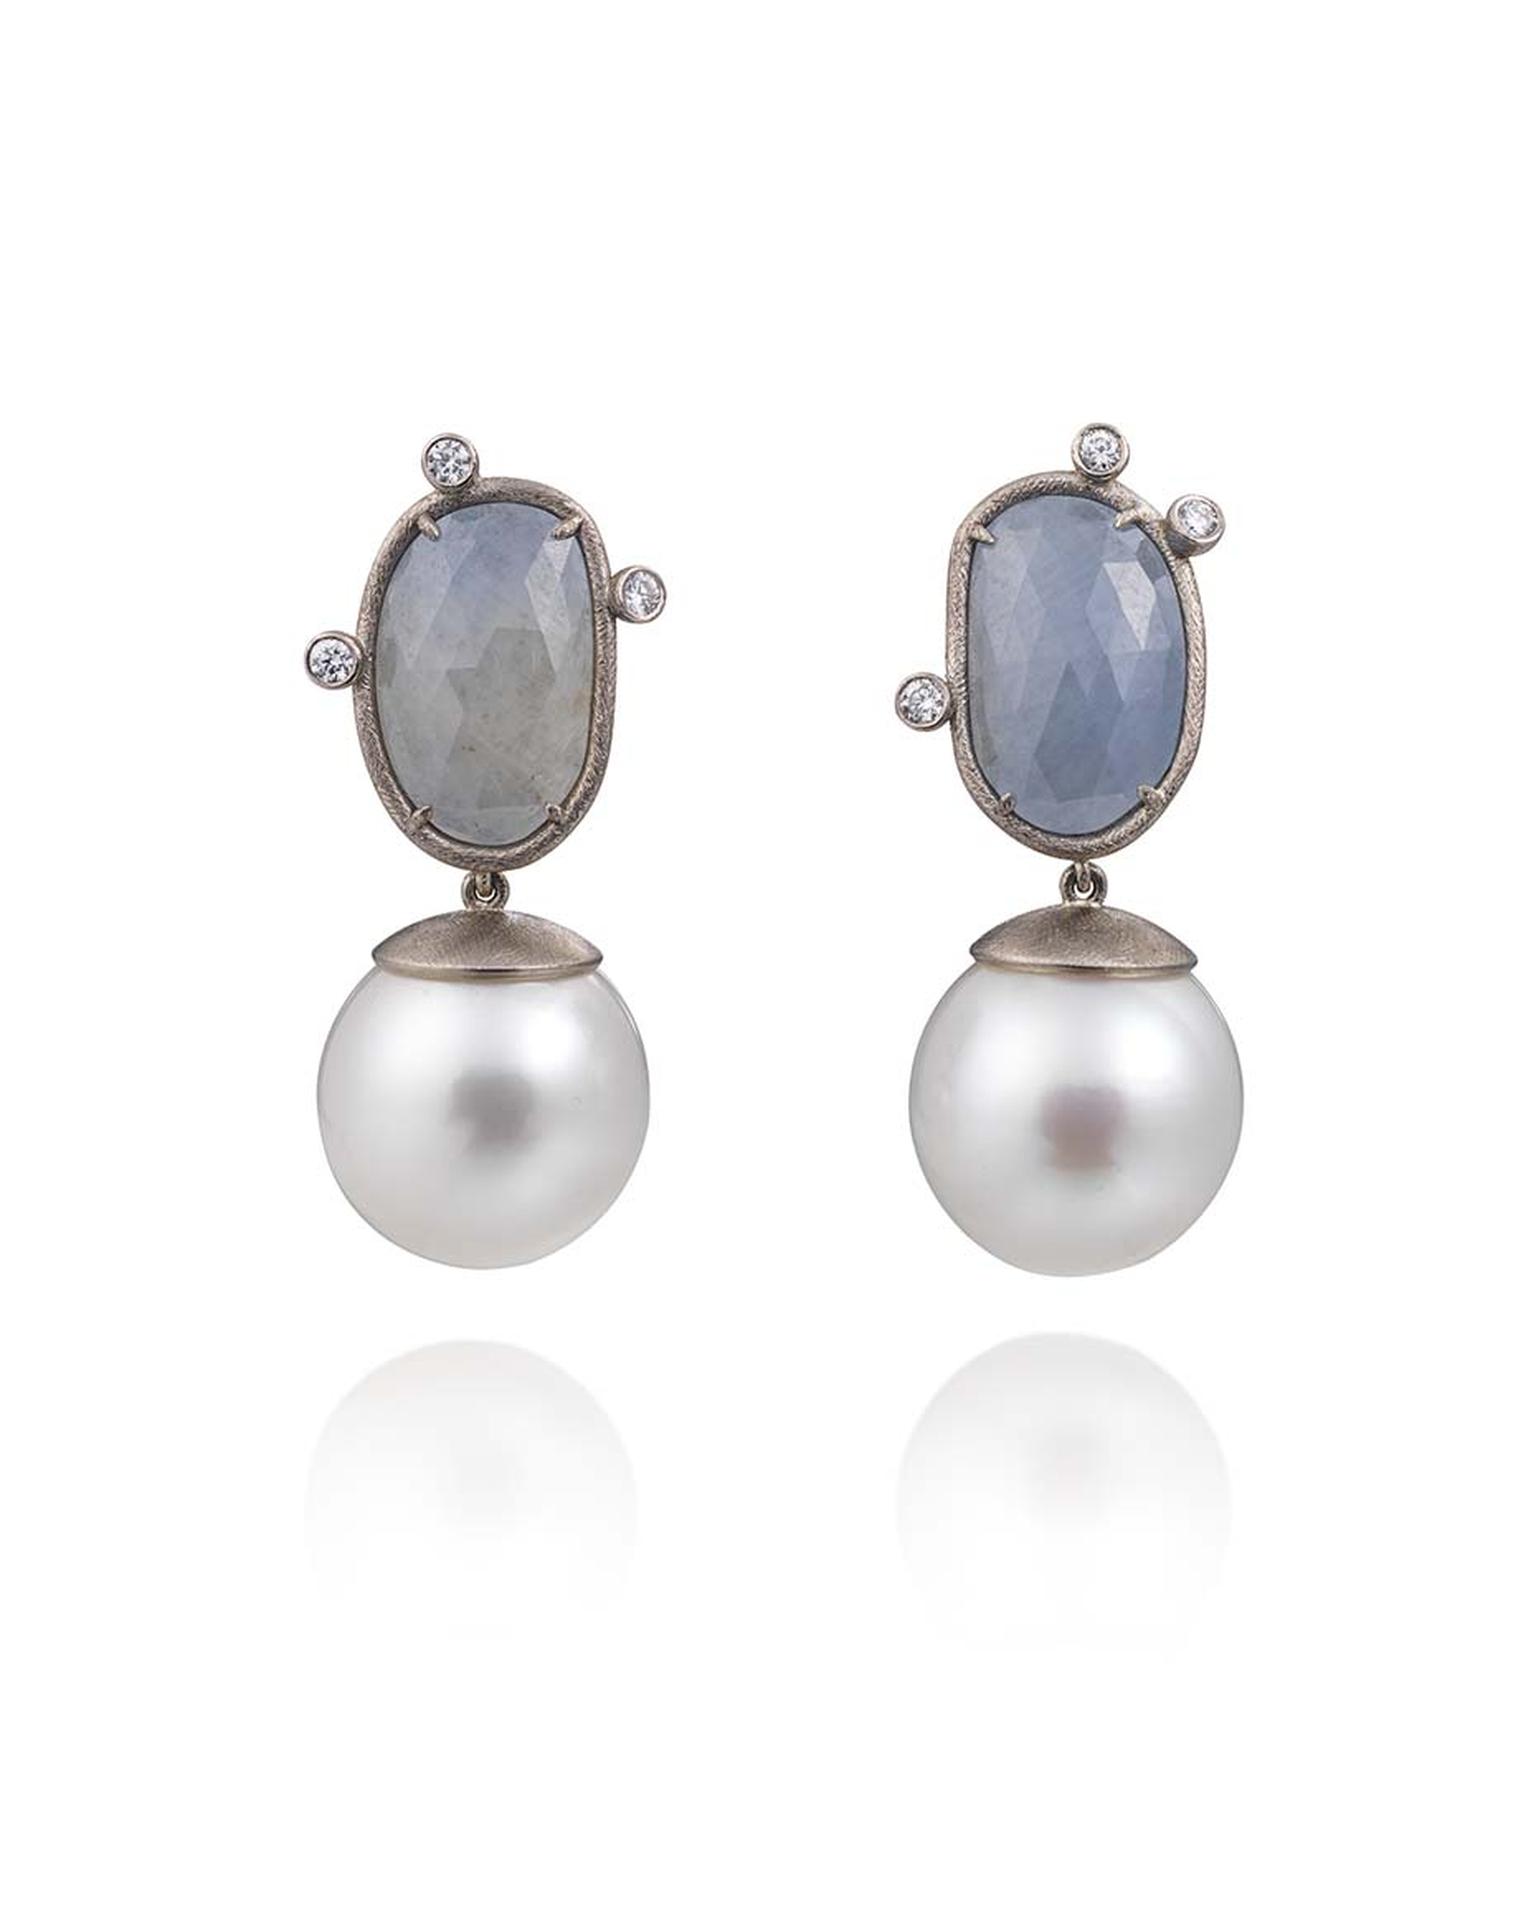 Mikala Djorup earrings with South Sea pearls, sapphires and diamonds (£4,800).